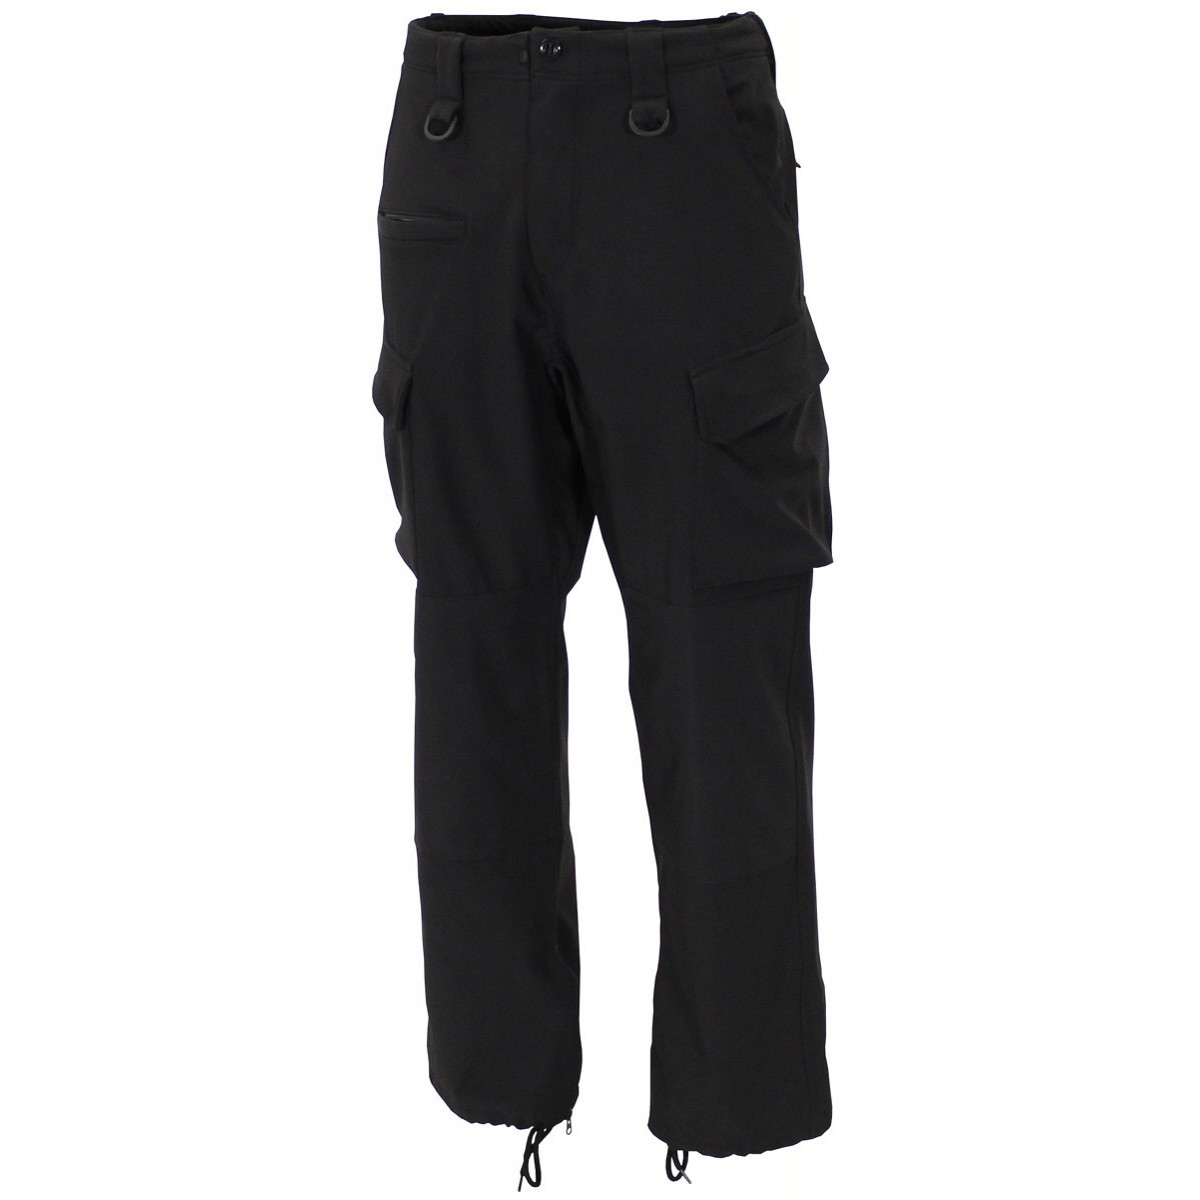 Kalhoty MFH Softshell Allround - černé, L